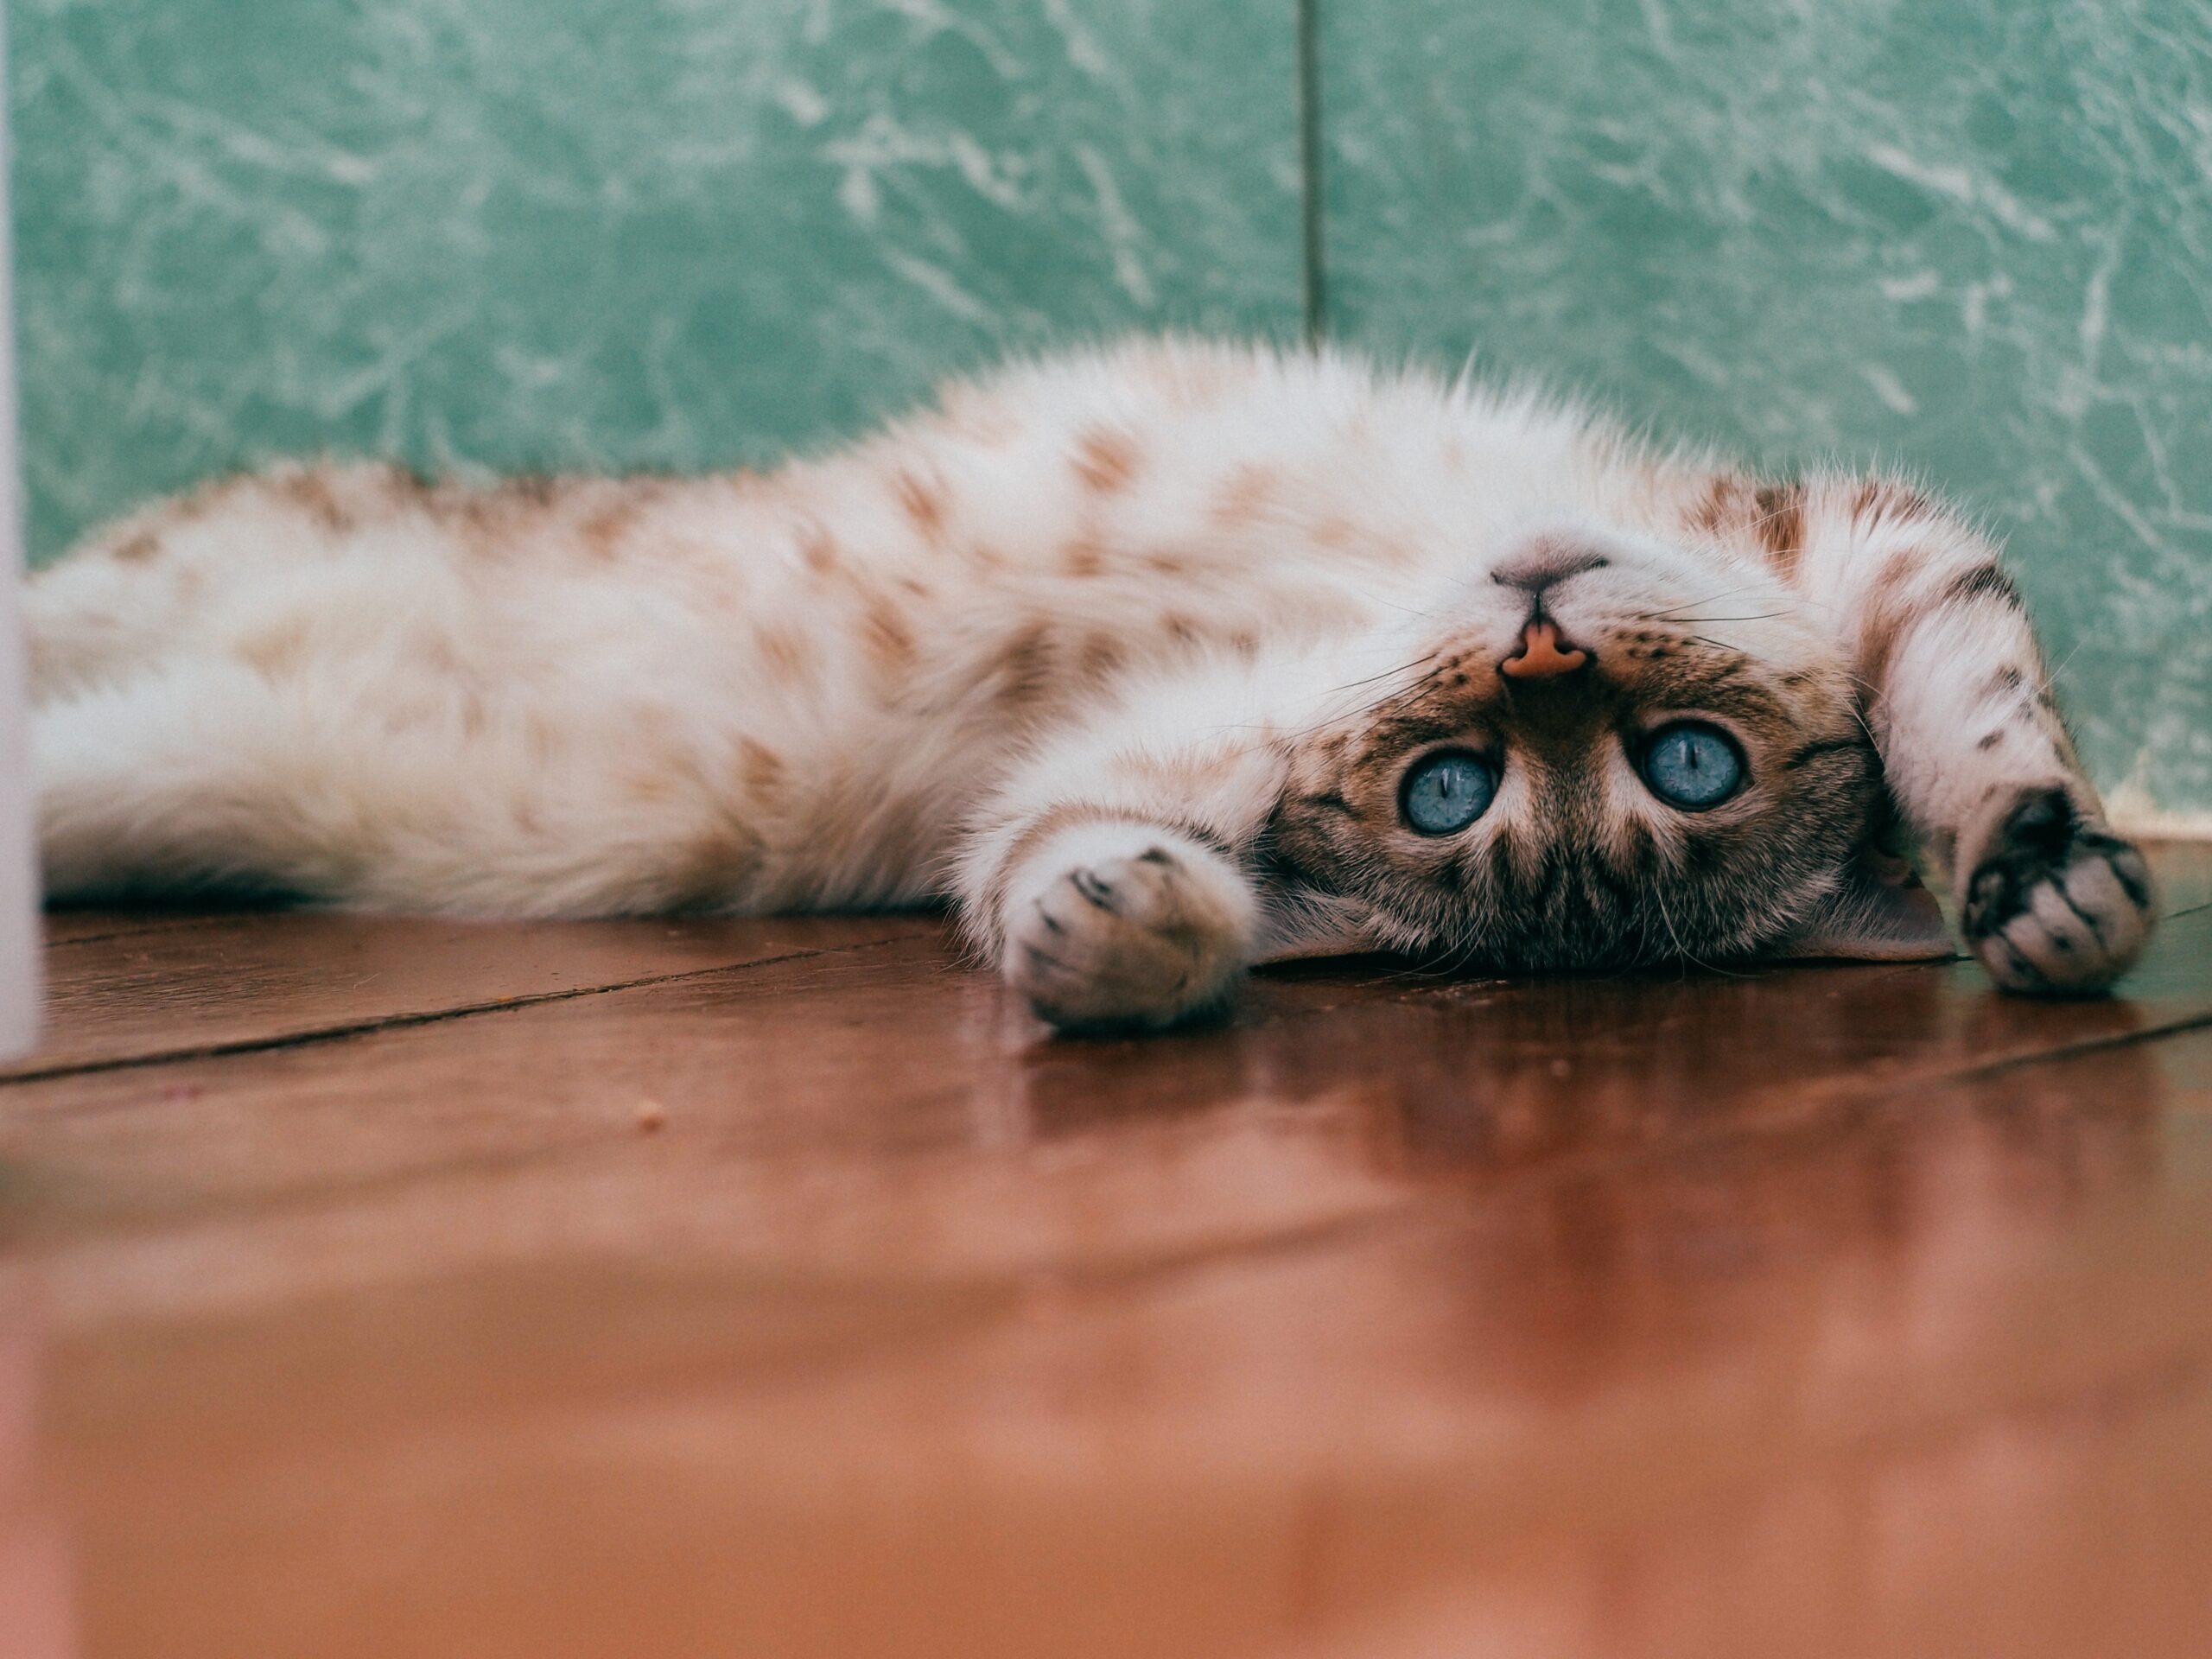 Fluffy cat on wooden floor